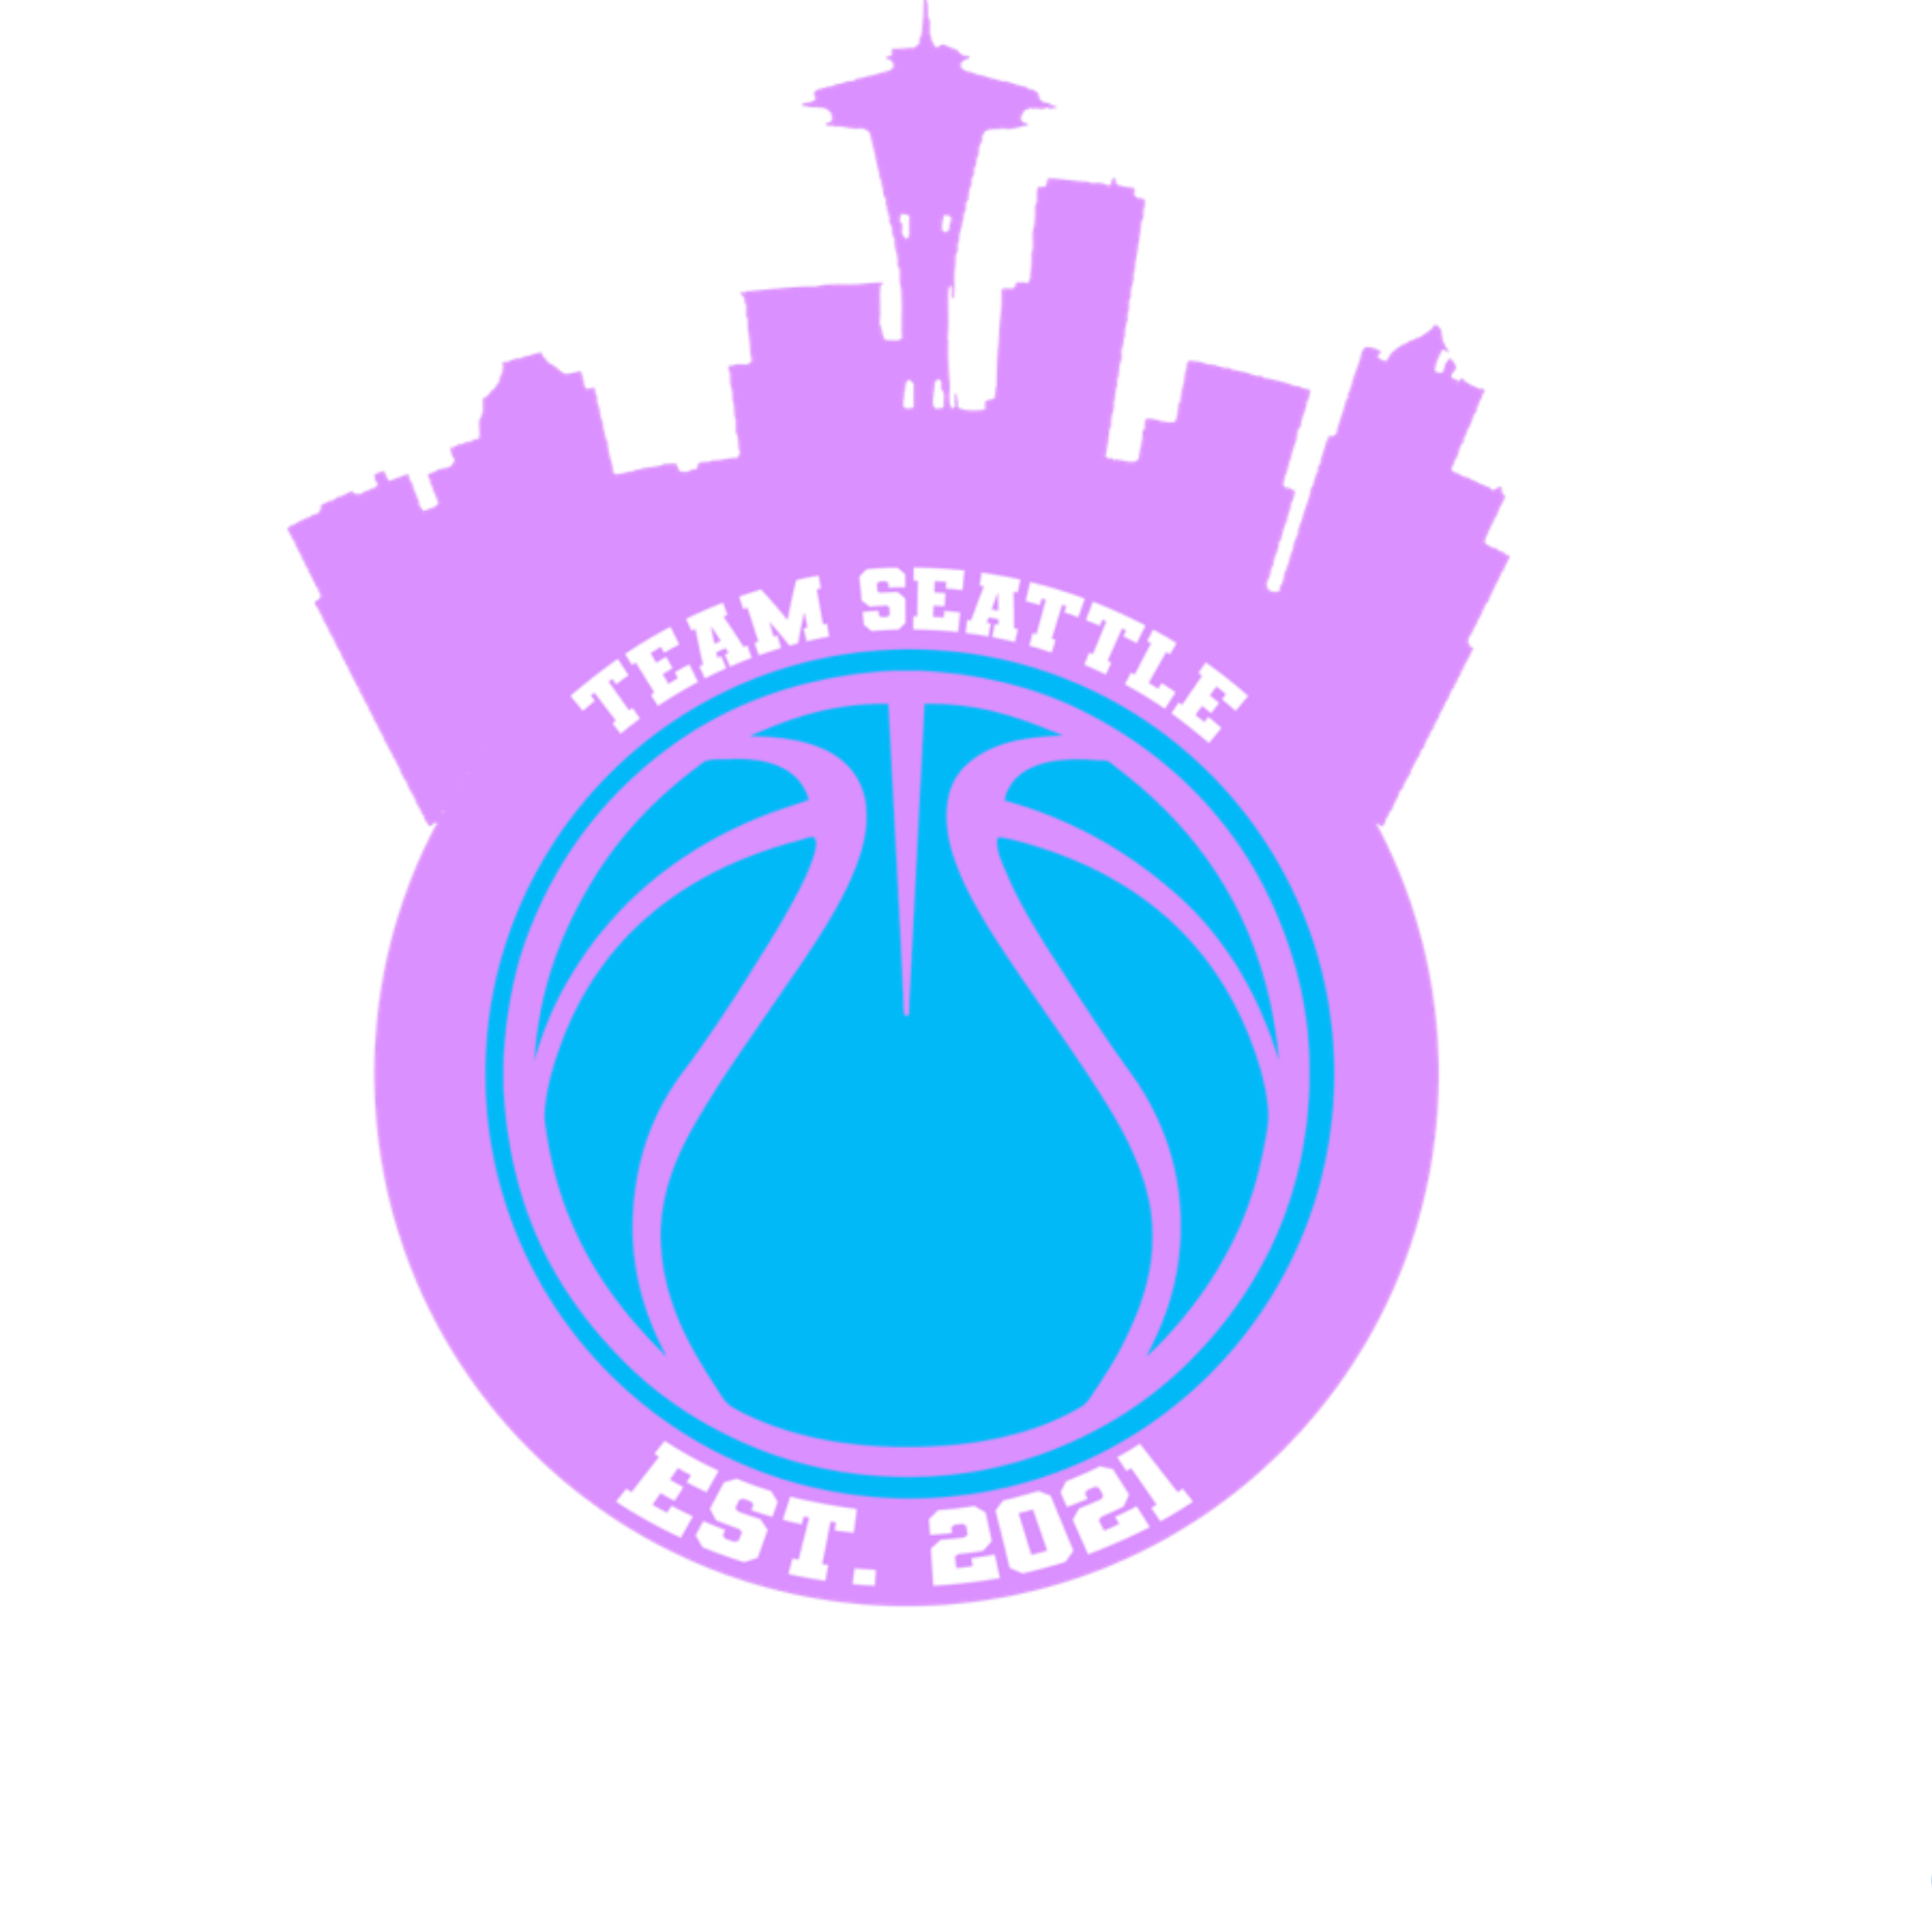 Organization logo for Team Seattle